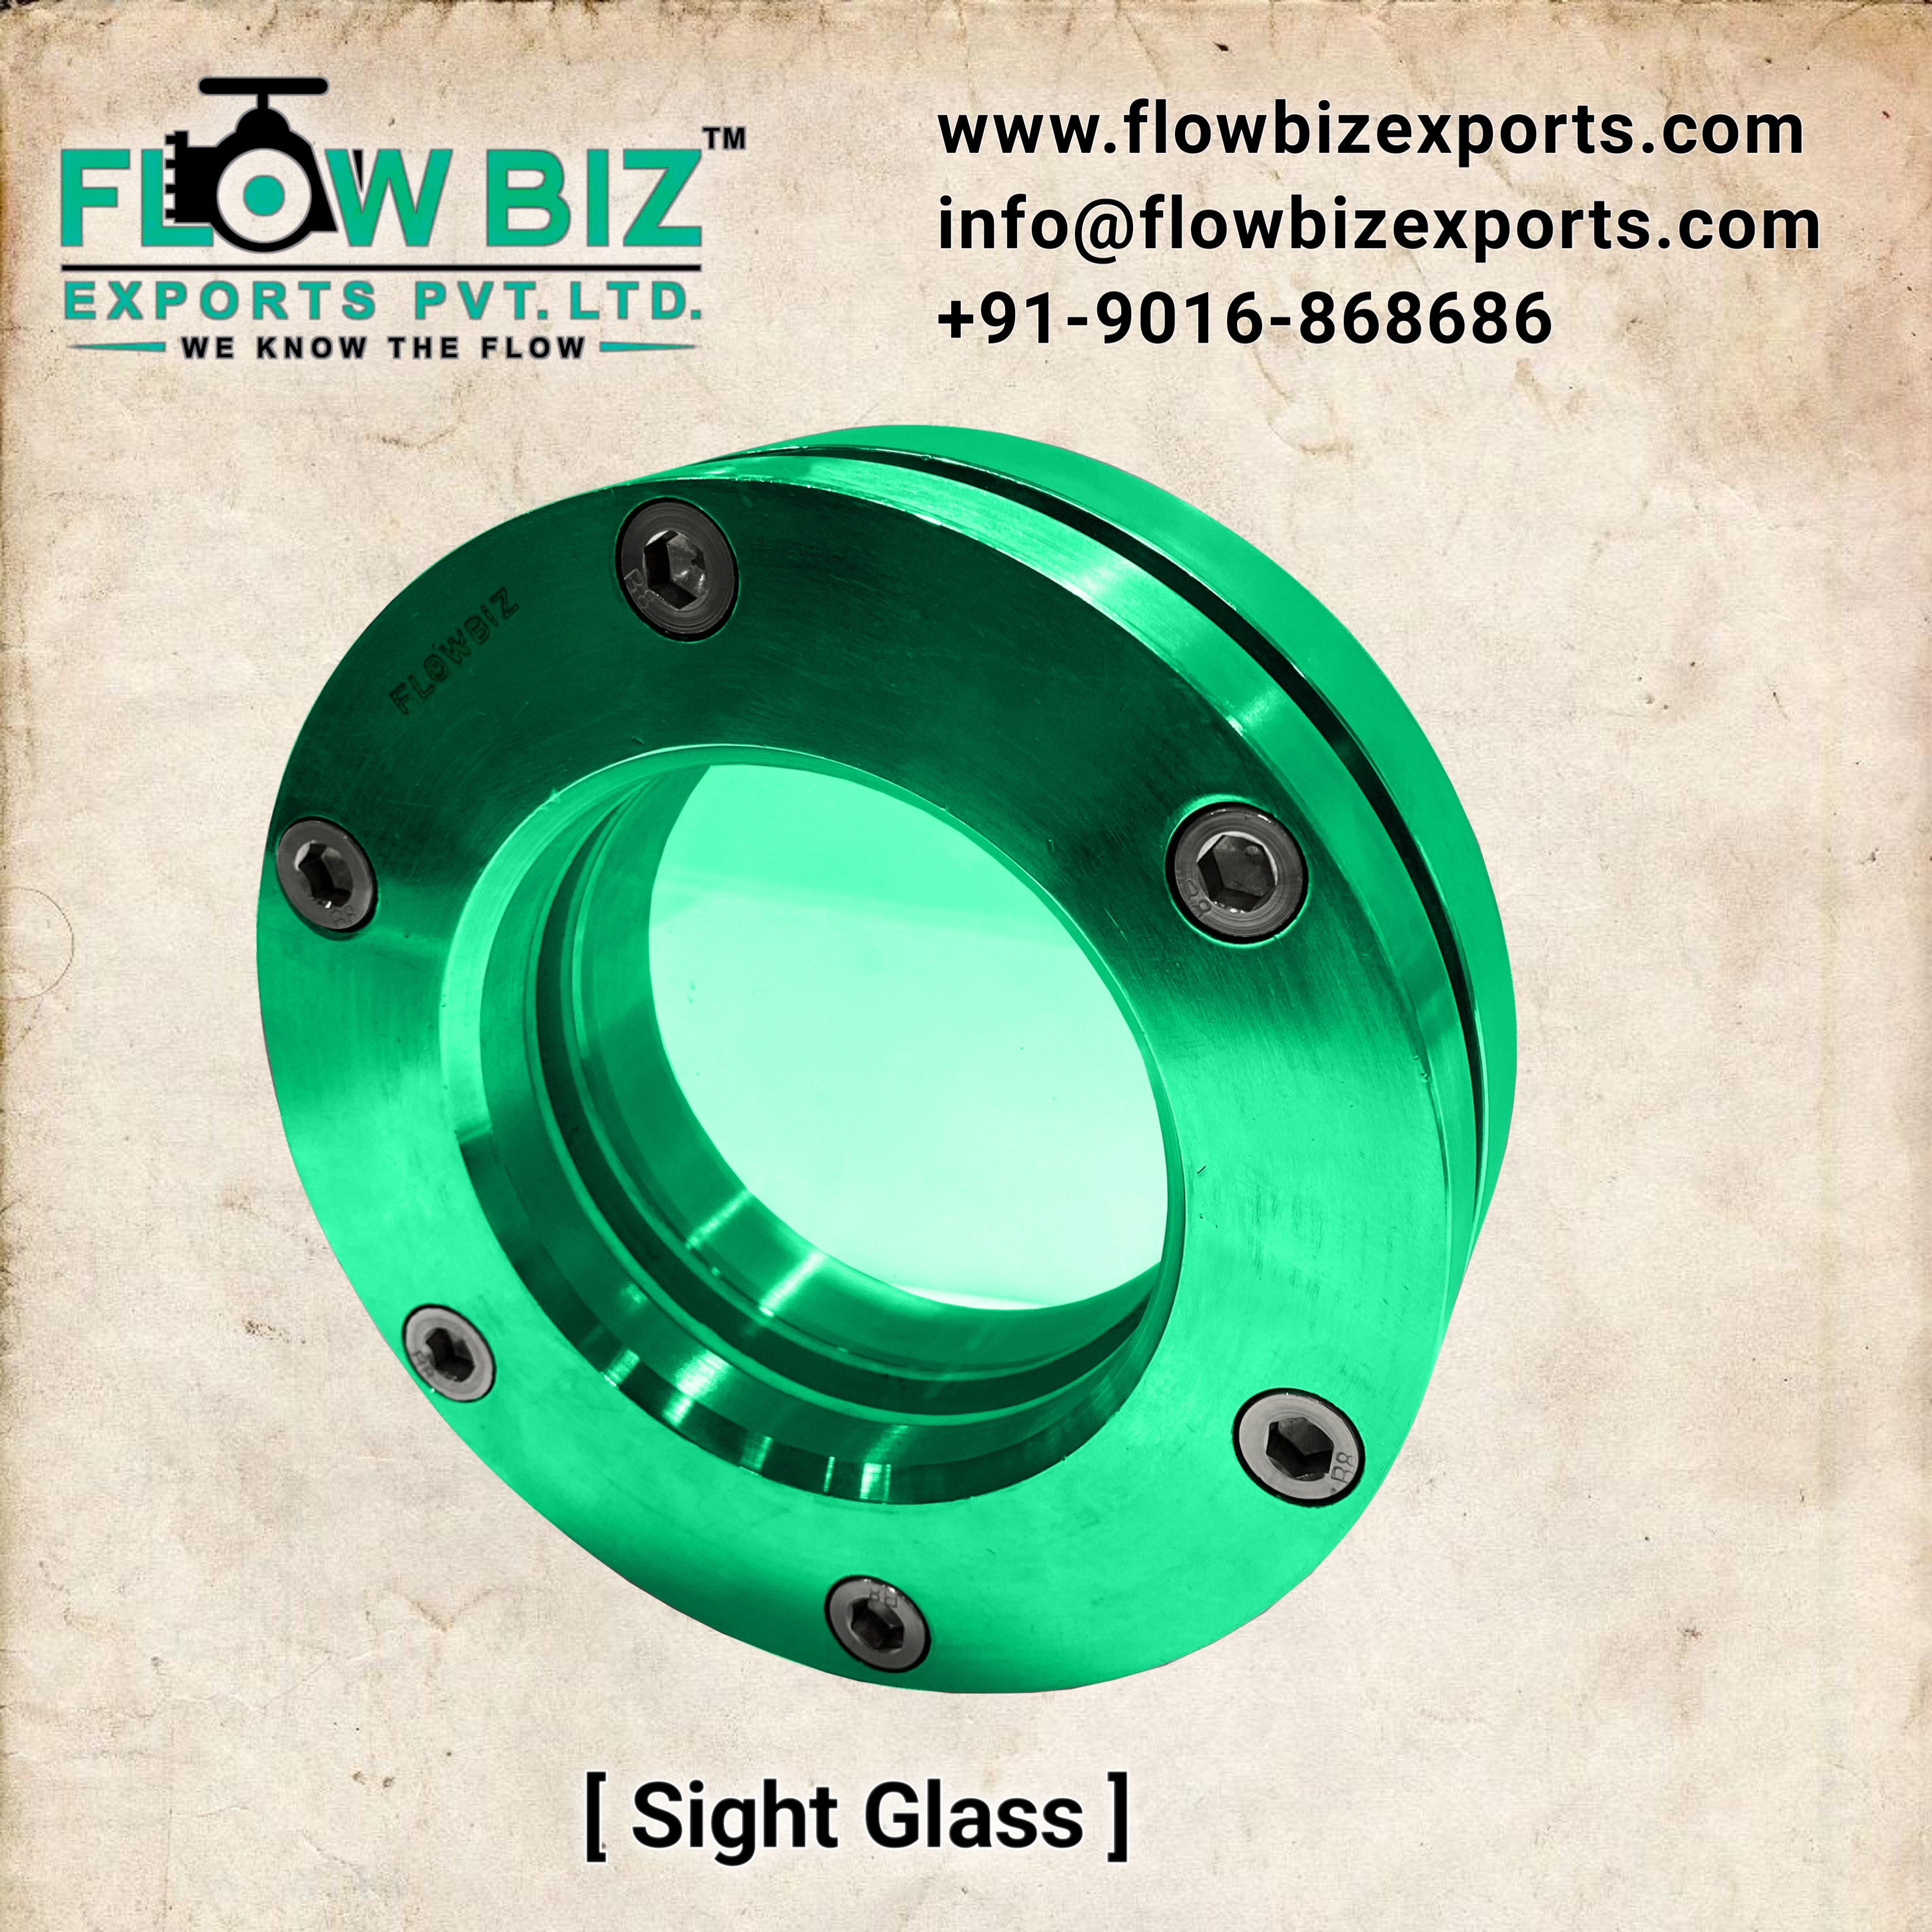 sight glass valve manufacturer india - Flowbiz 